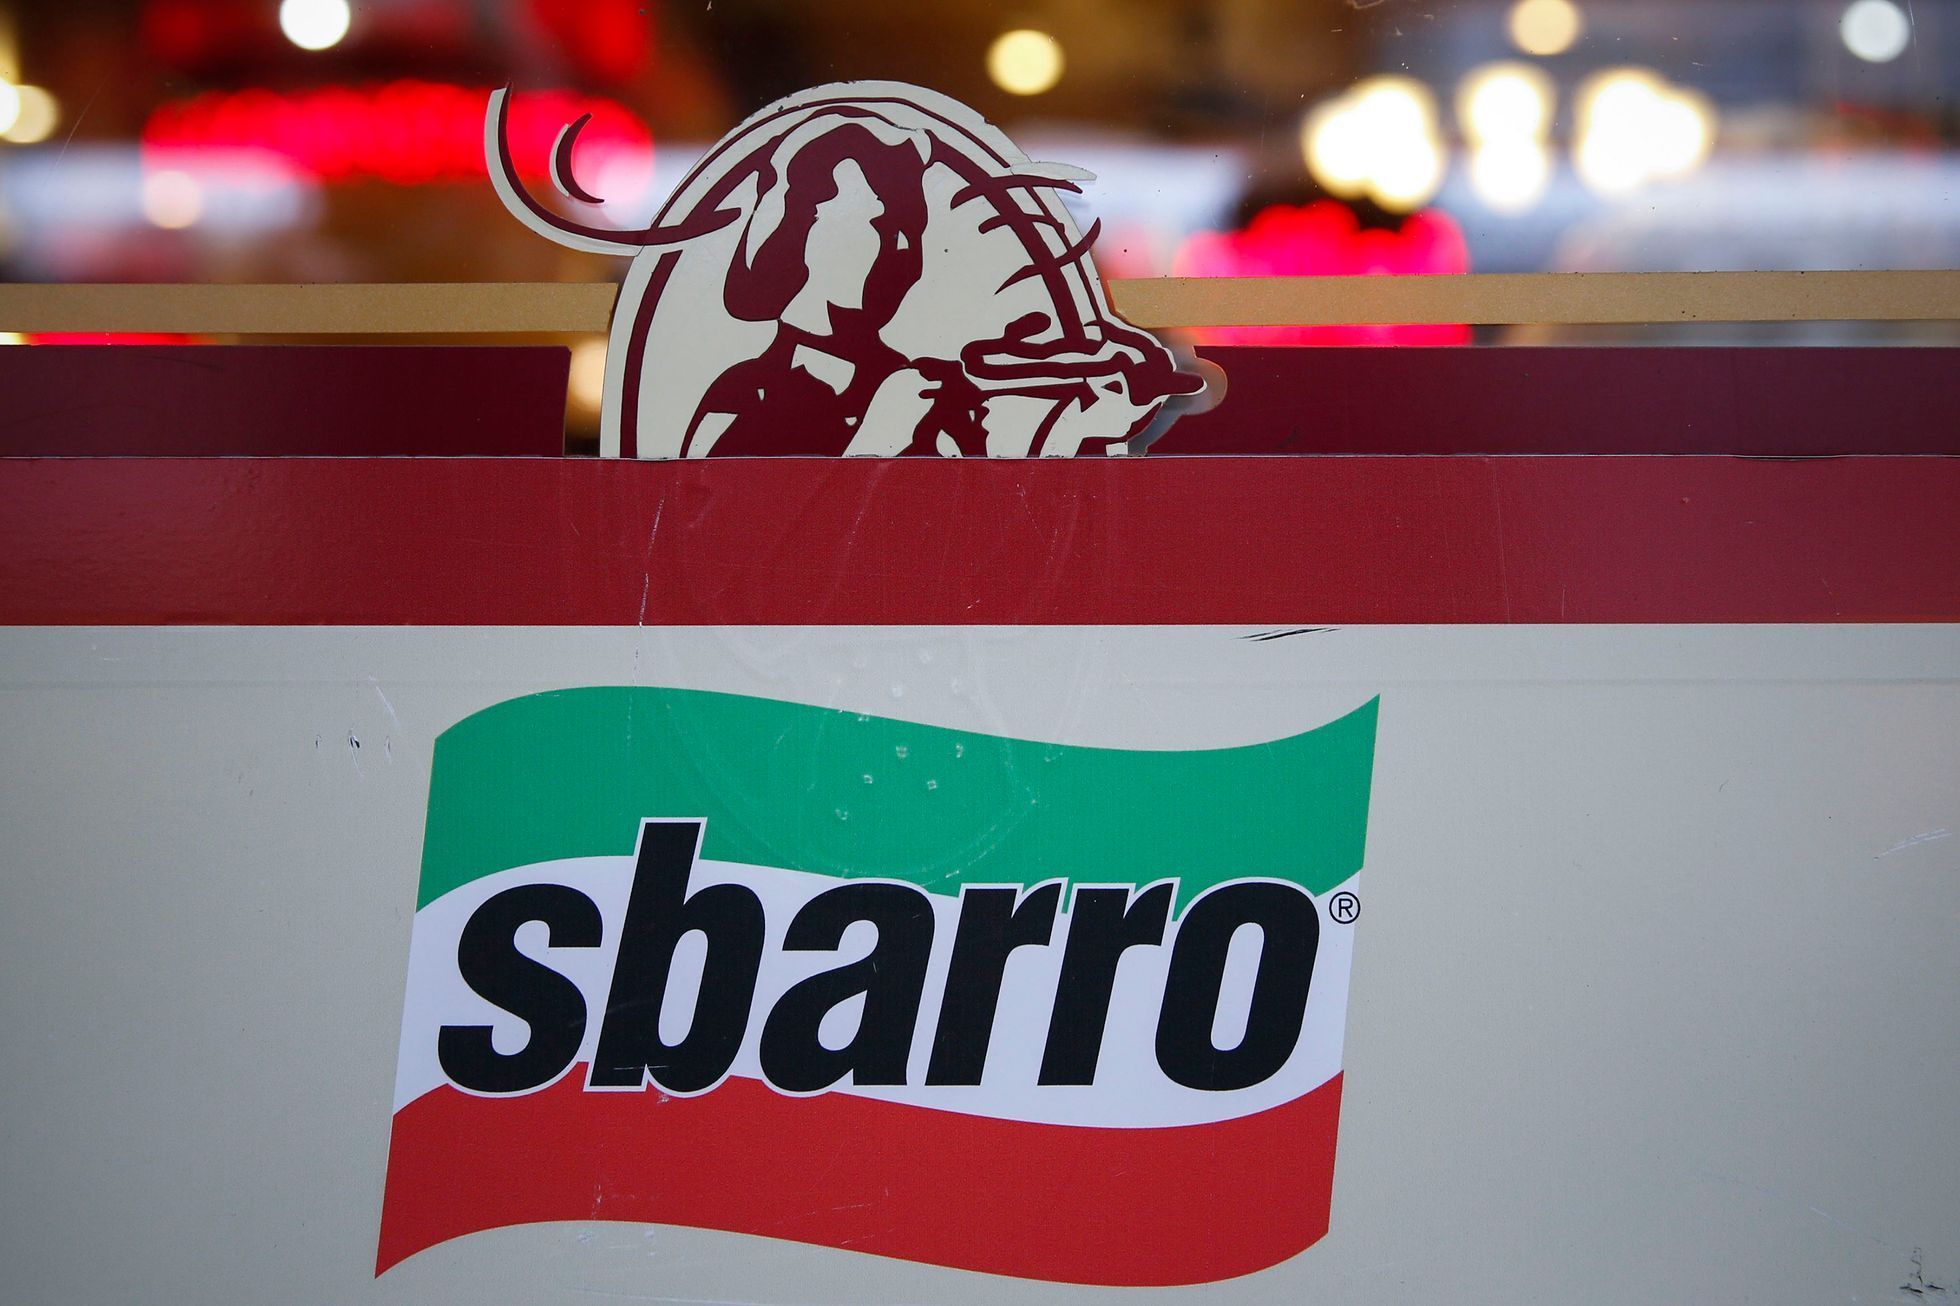 Síť restaurací Sbarro logo